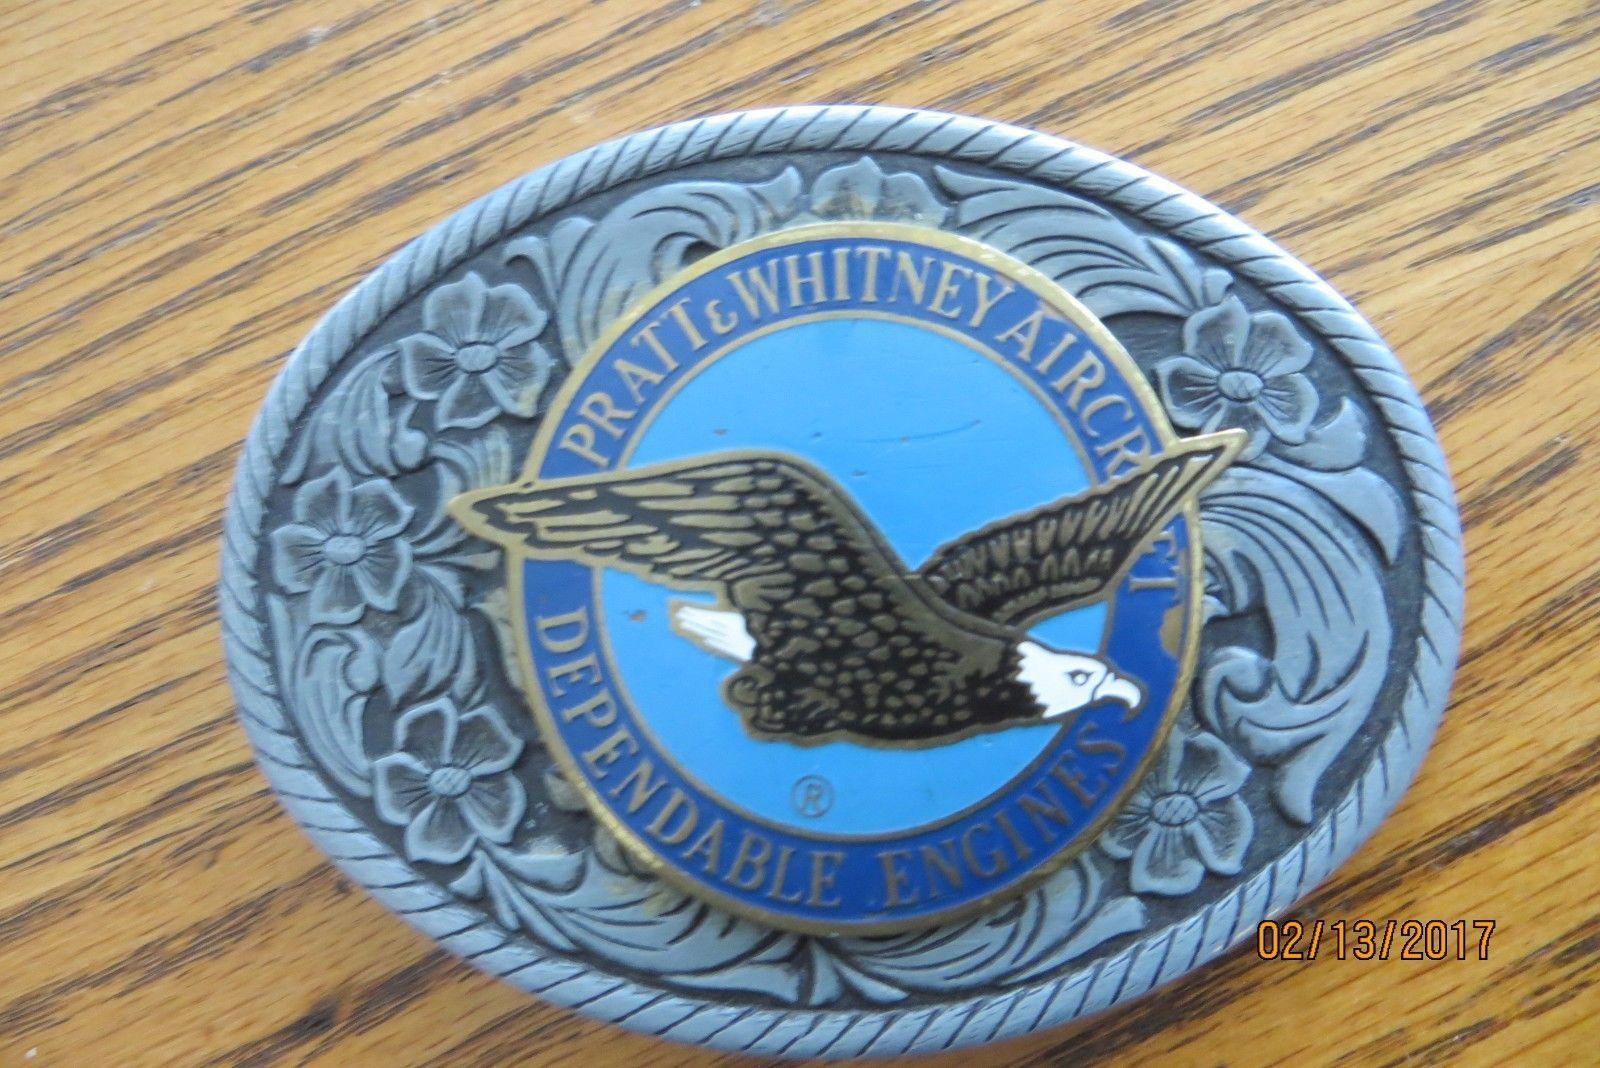 Pratt and Whitney Old Logo - Pratt & Whitney Aircraft Dependable Engine Mfg Co Original Belt